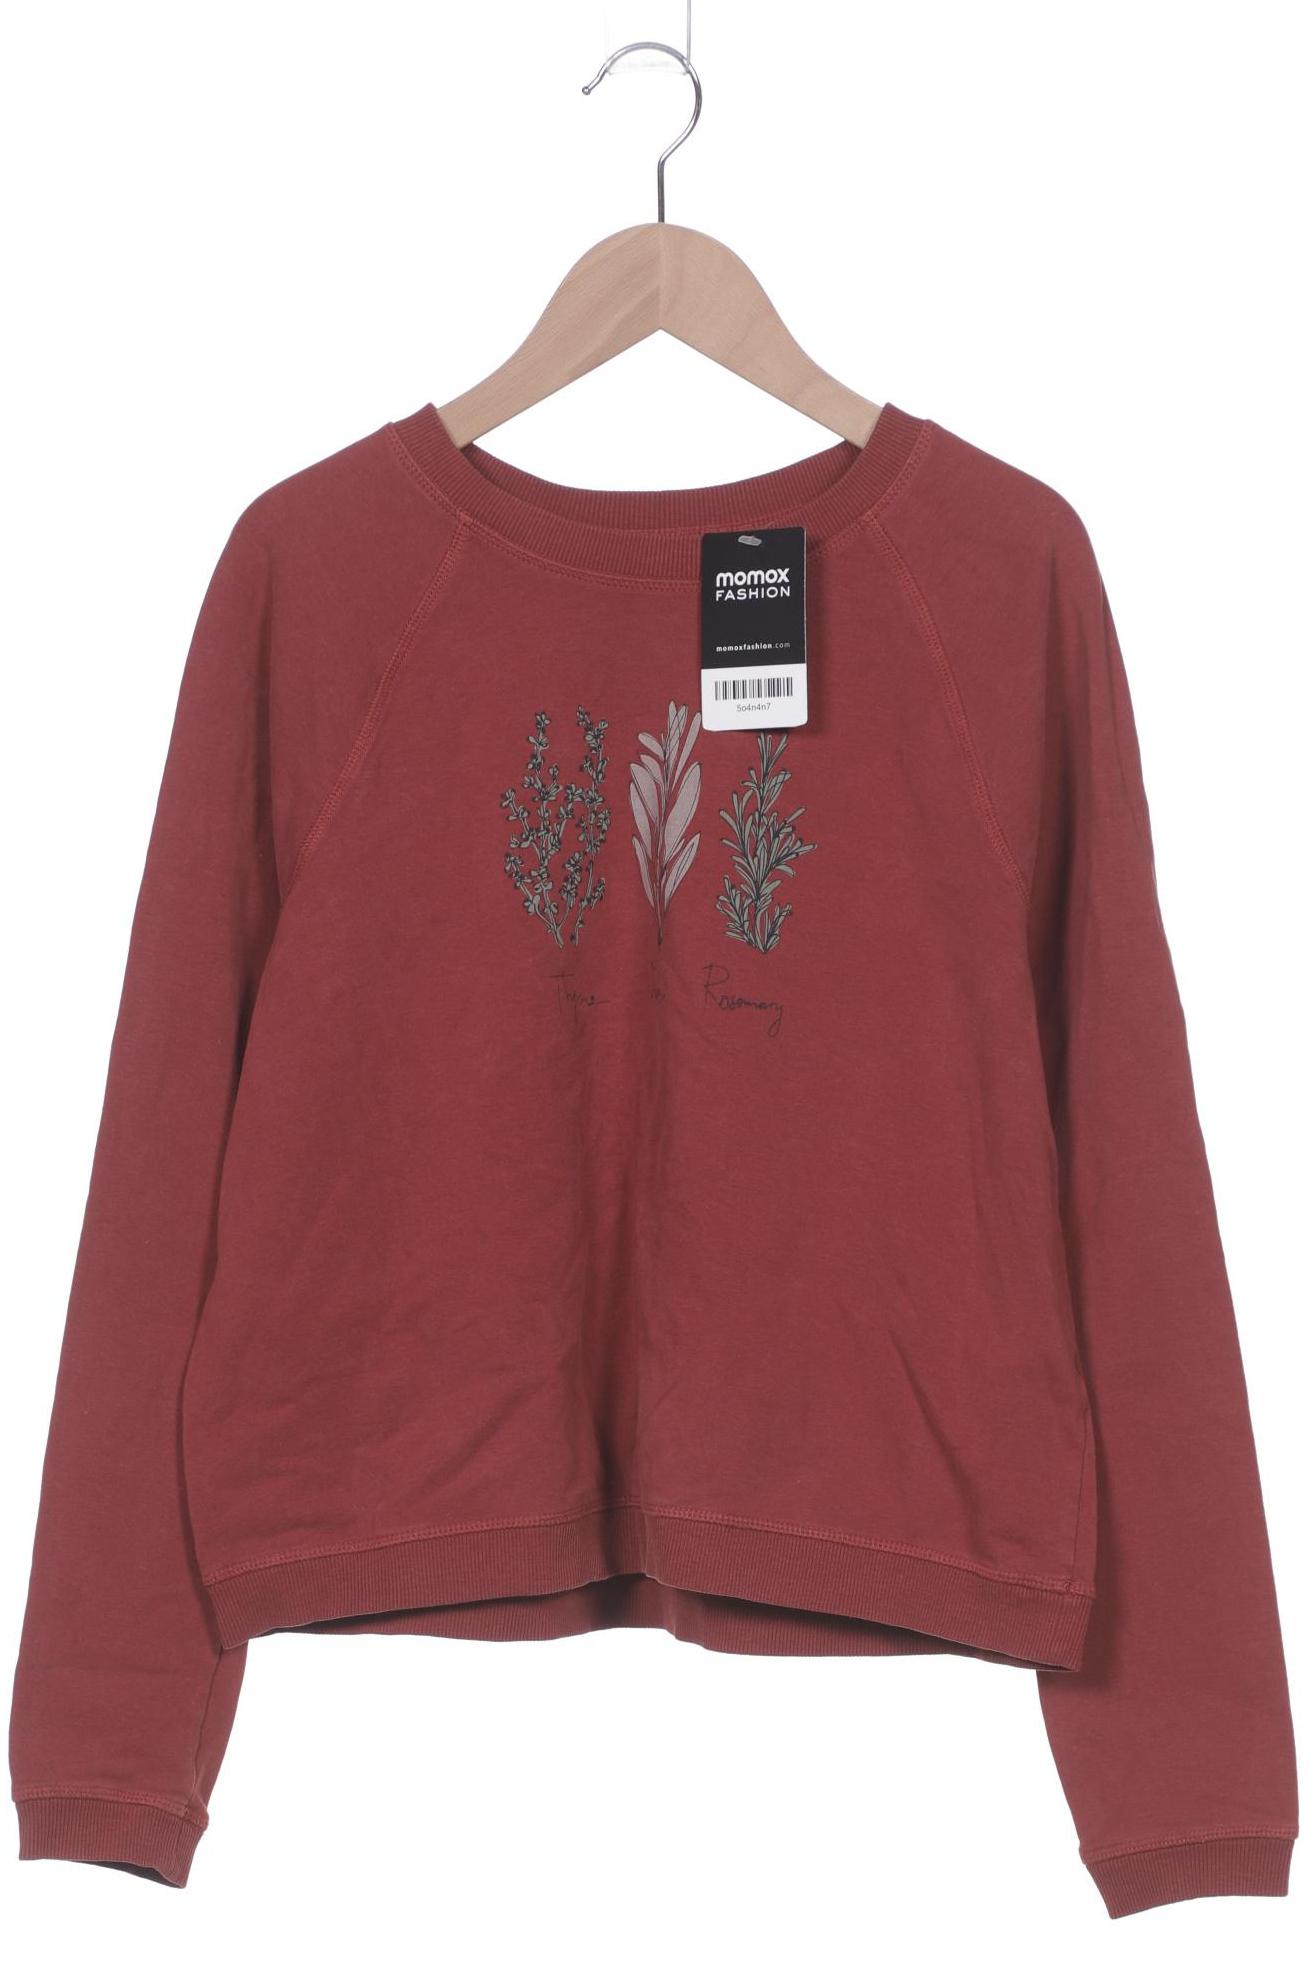 Maas Damen Sweatshirt, rot, Gr. 36 von Maas